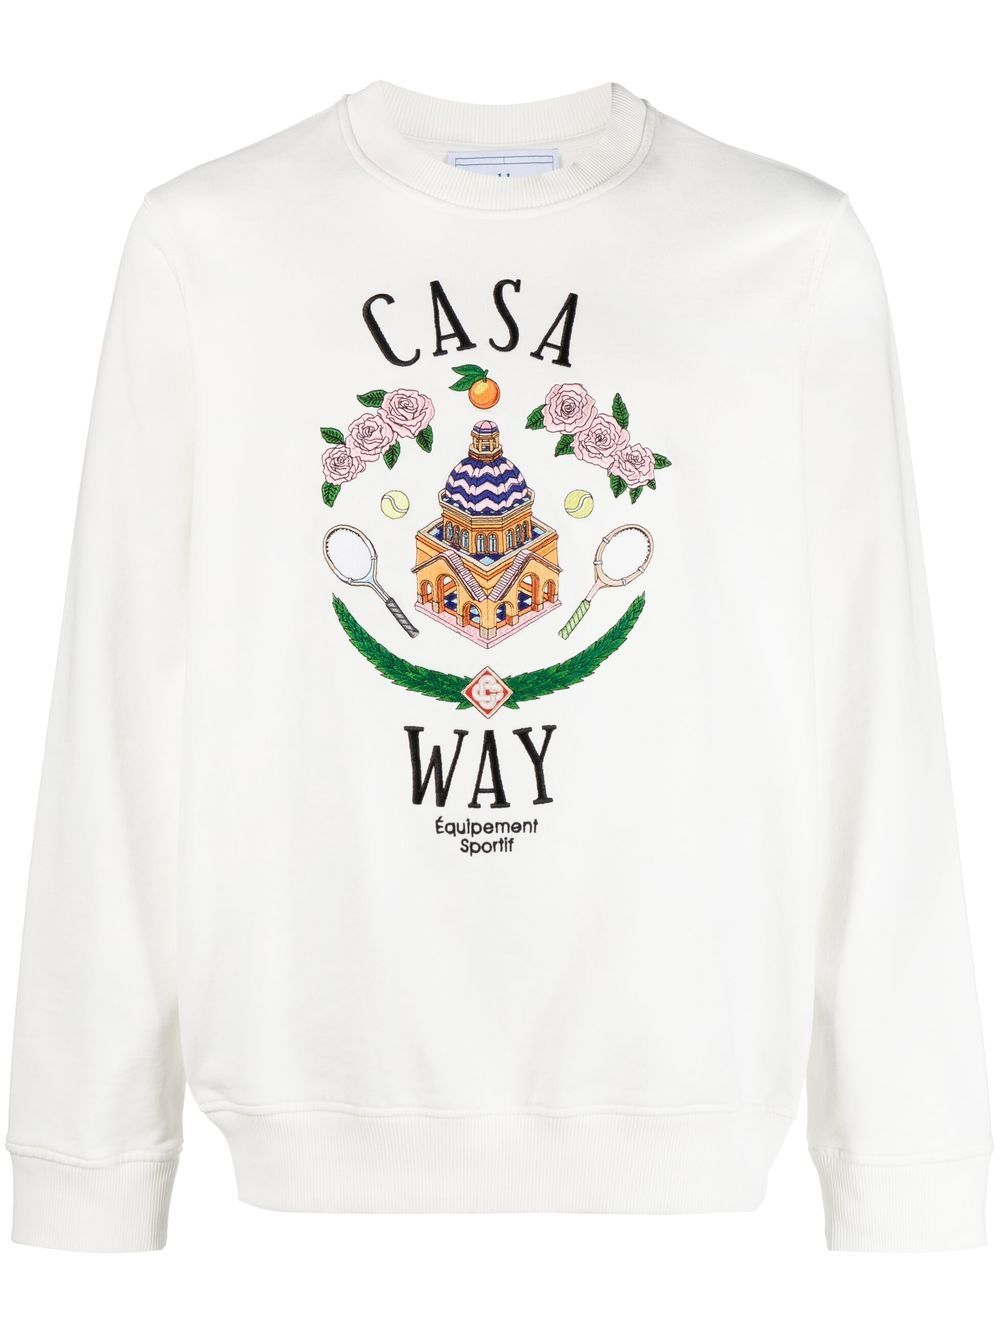 Casa Way embroidered sweatshirt